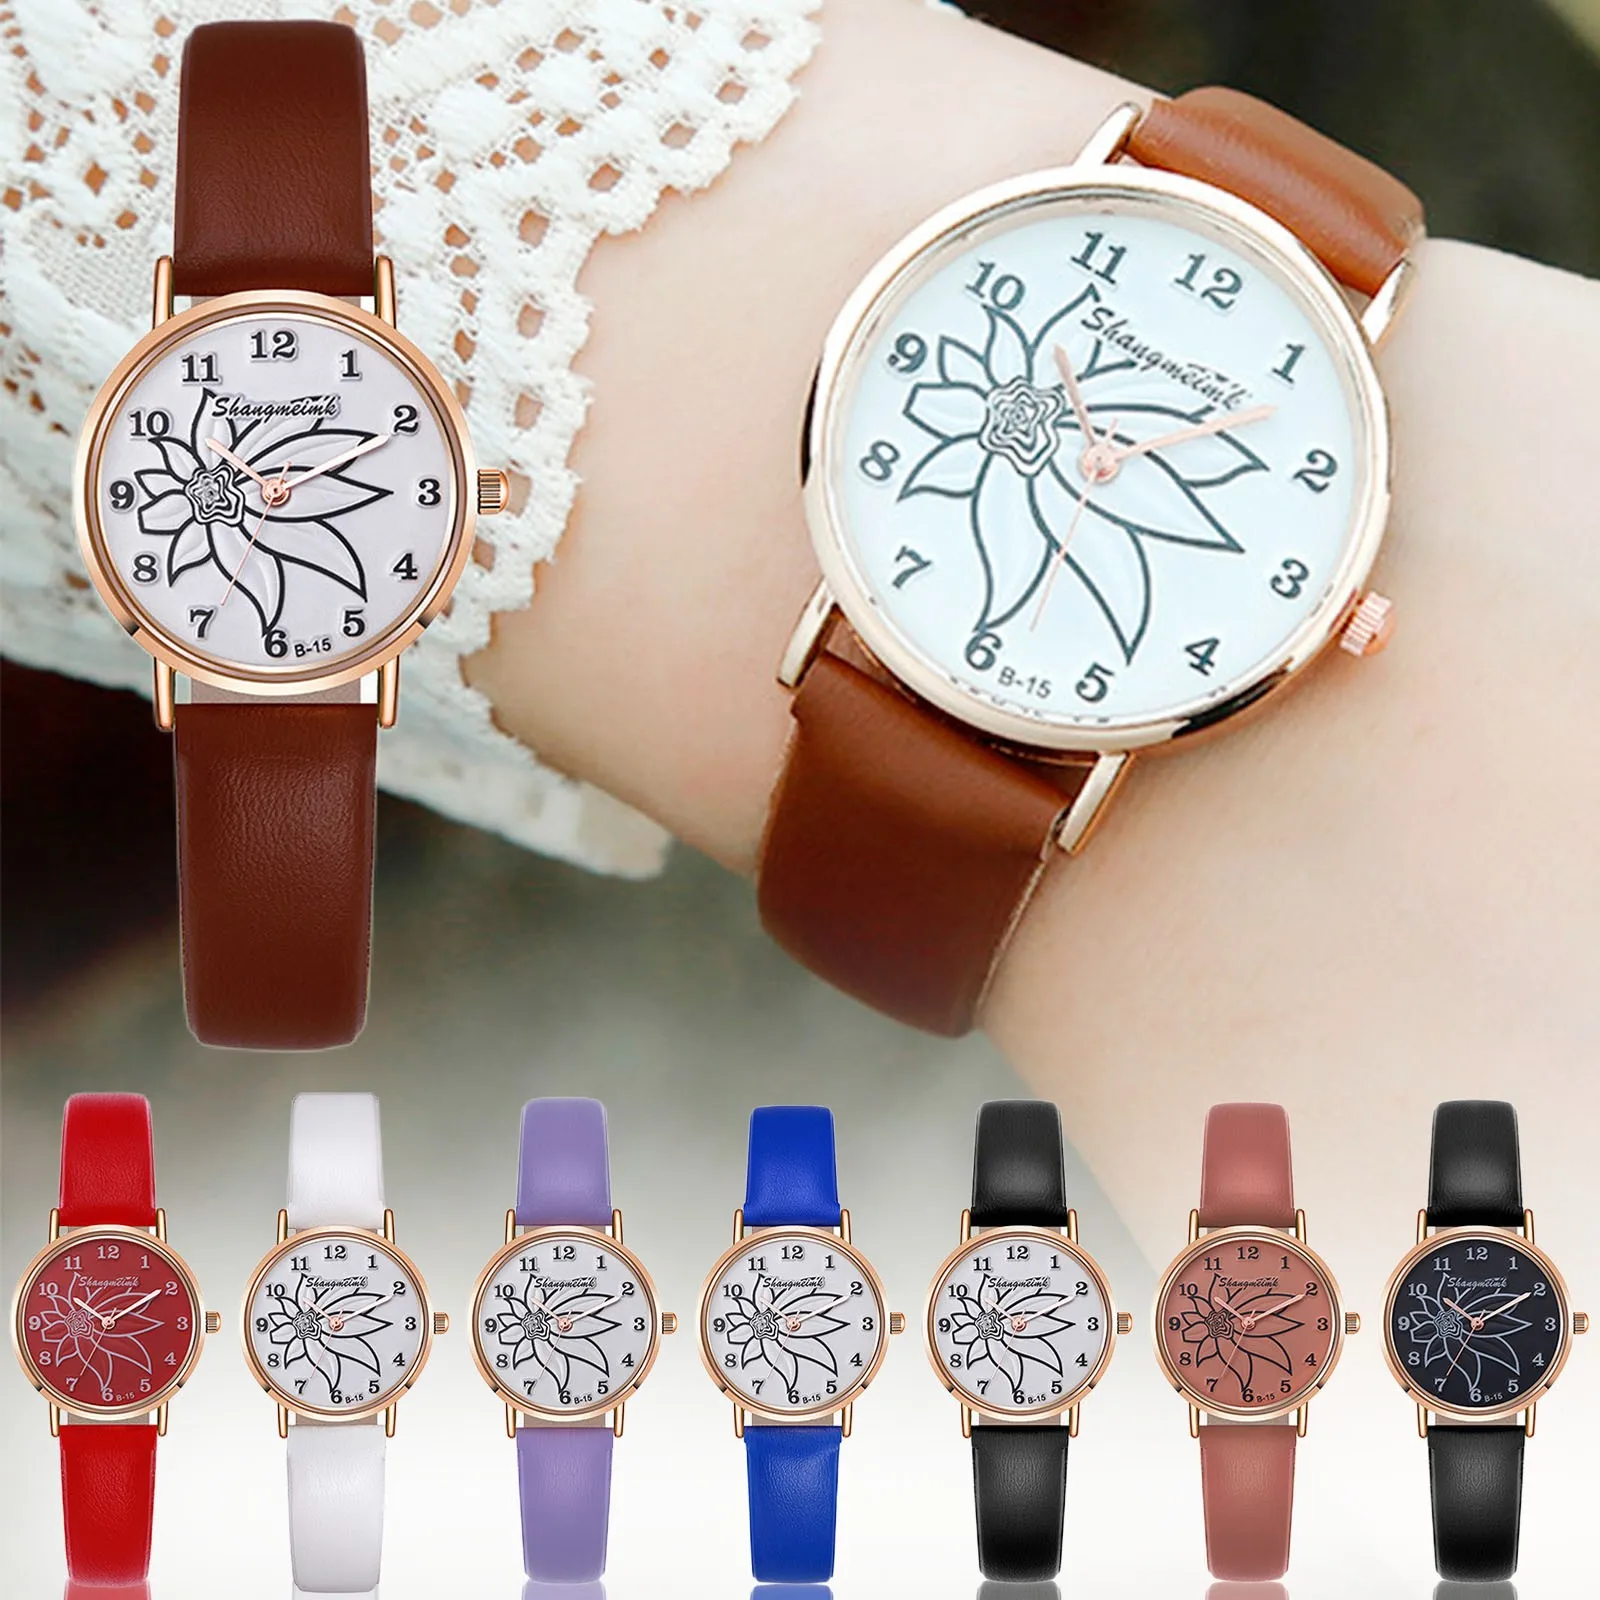 

Women Watch Easy To Read Arabic Numerals Simple-dial Digital Watch Leather Strap Quartz Wristwatches Montre Femme Reloj Mujer